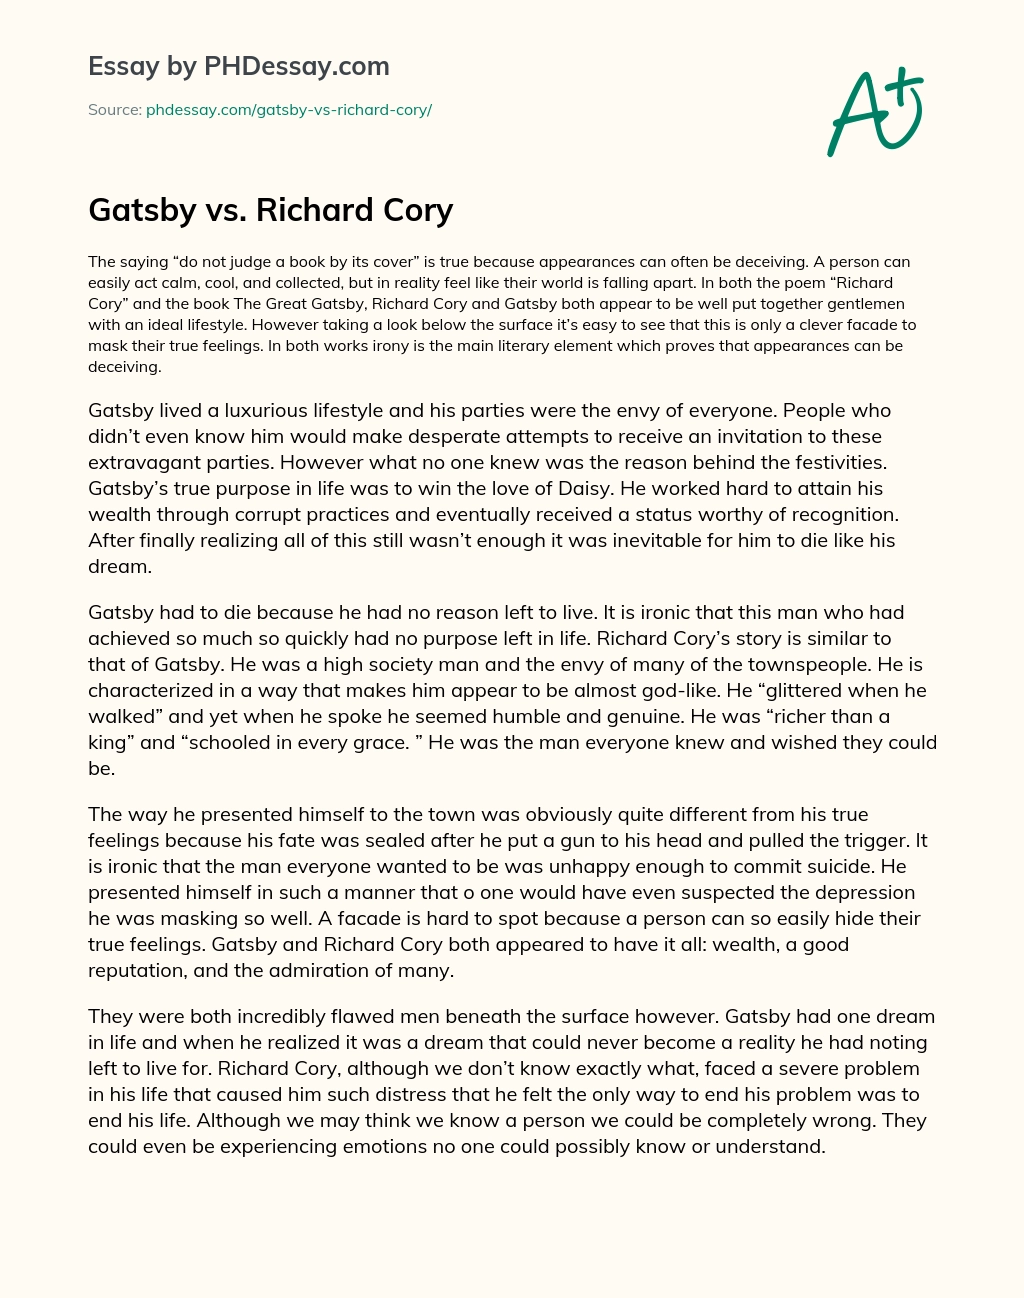 Gatsby vs. Richard Cory essay